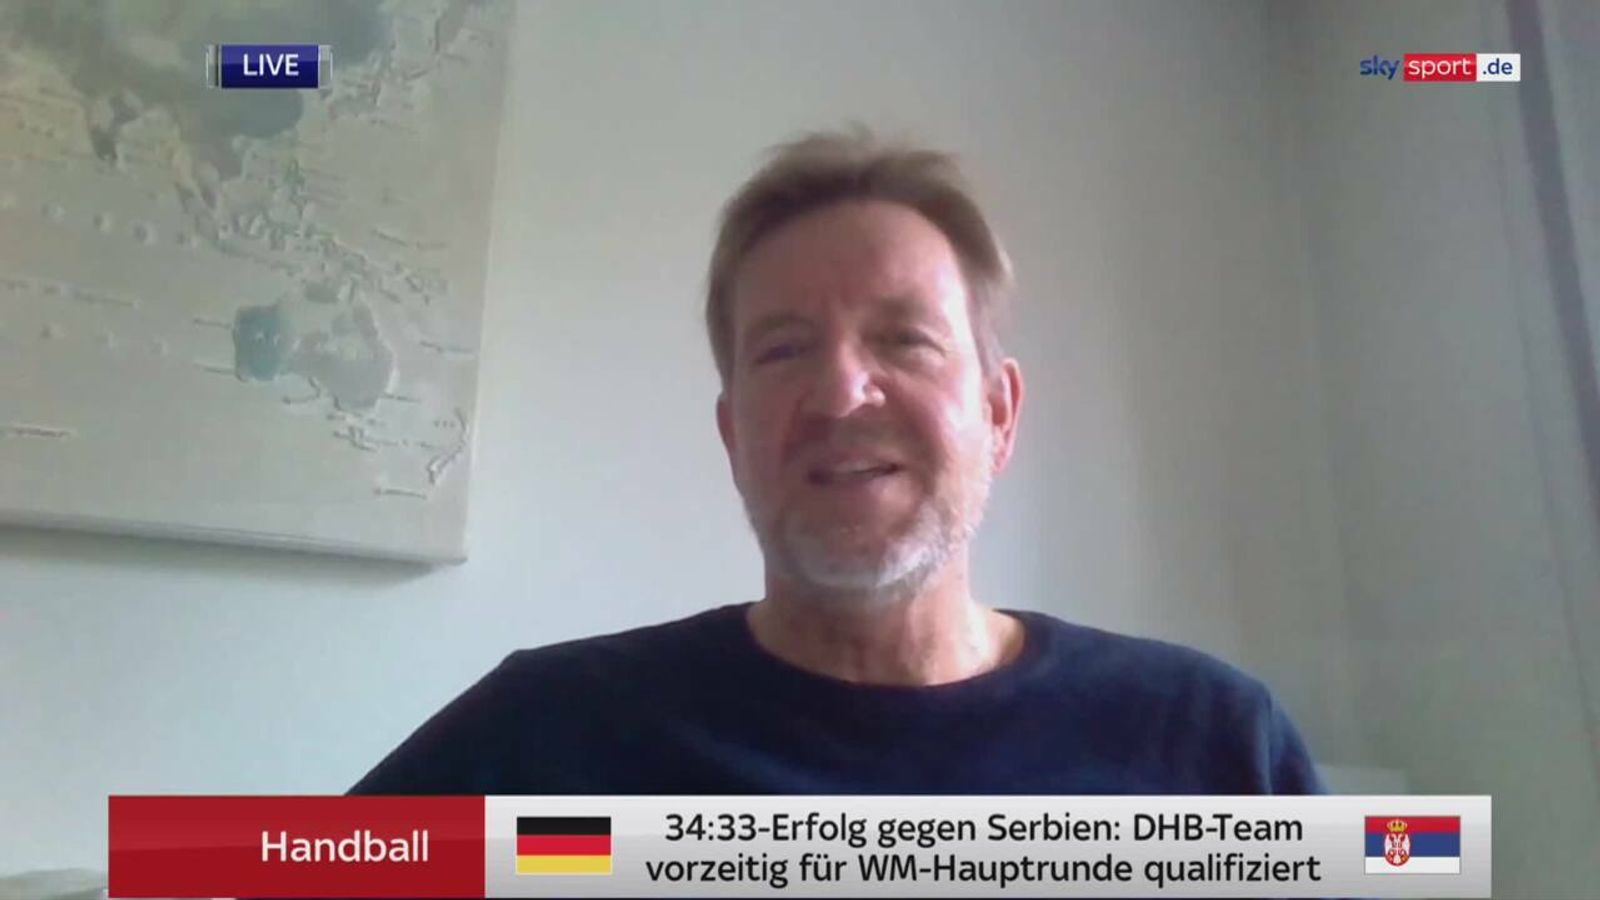 Handball WM Martin Schwalb spricht im Interview über den Sieg gegen Serbien Handball News Sky Sport